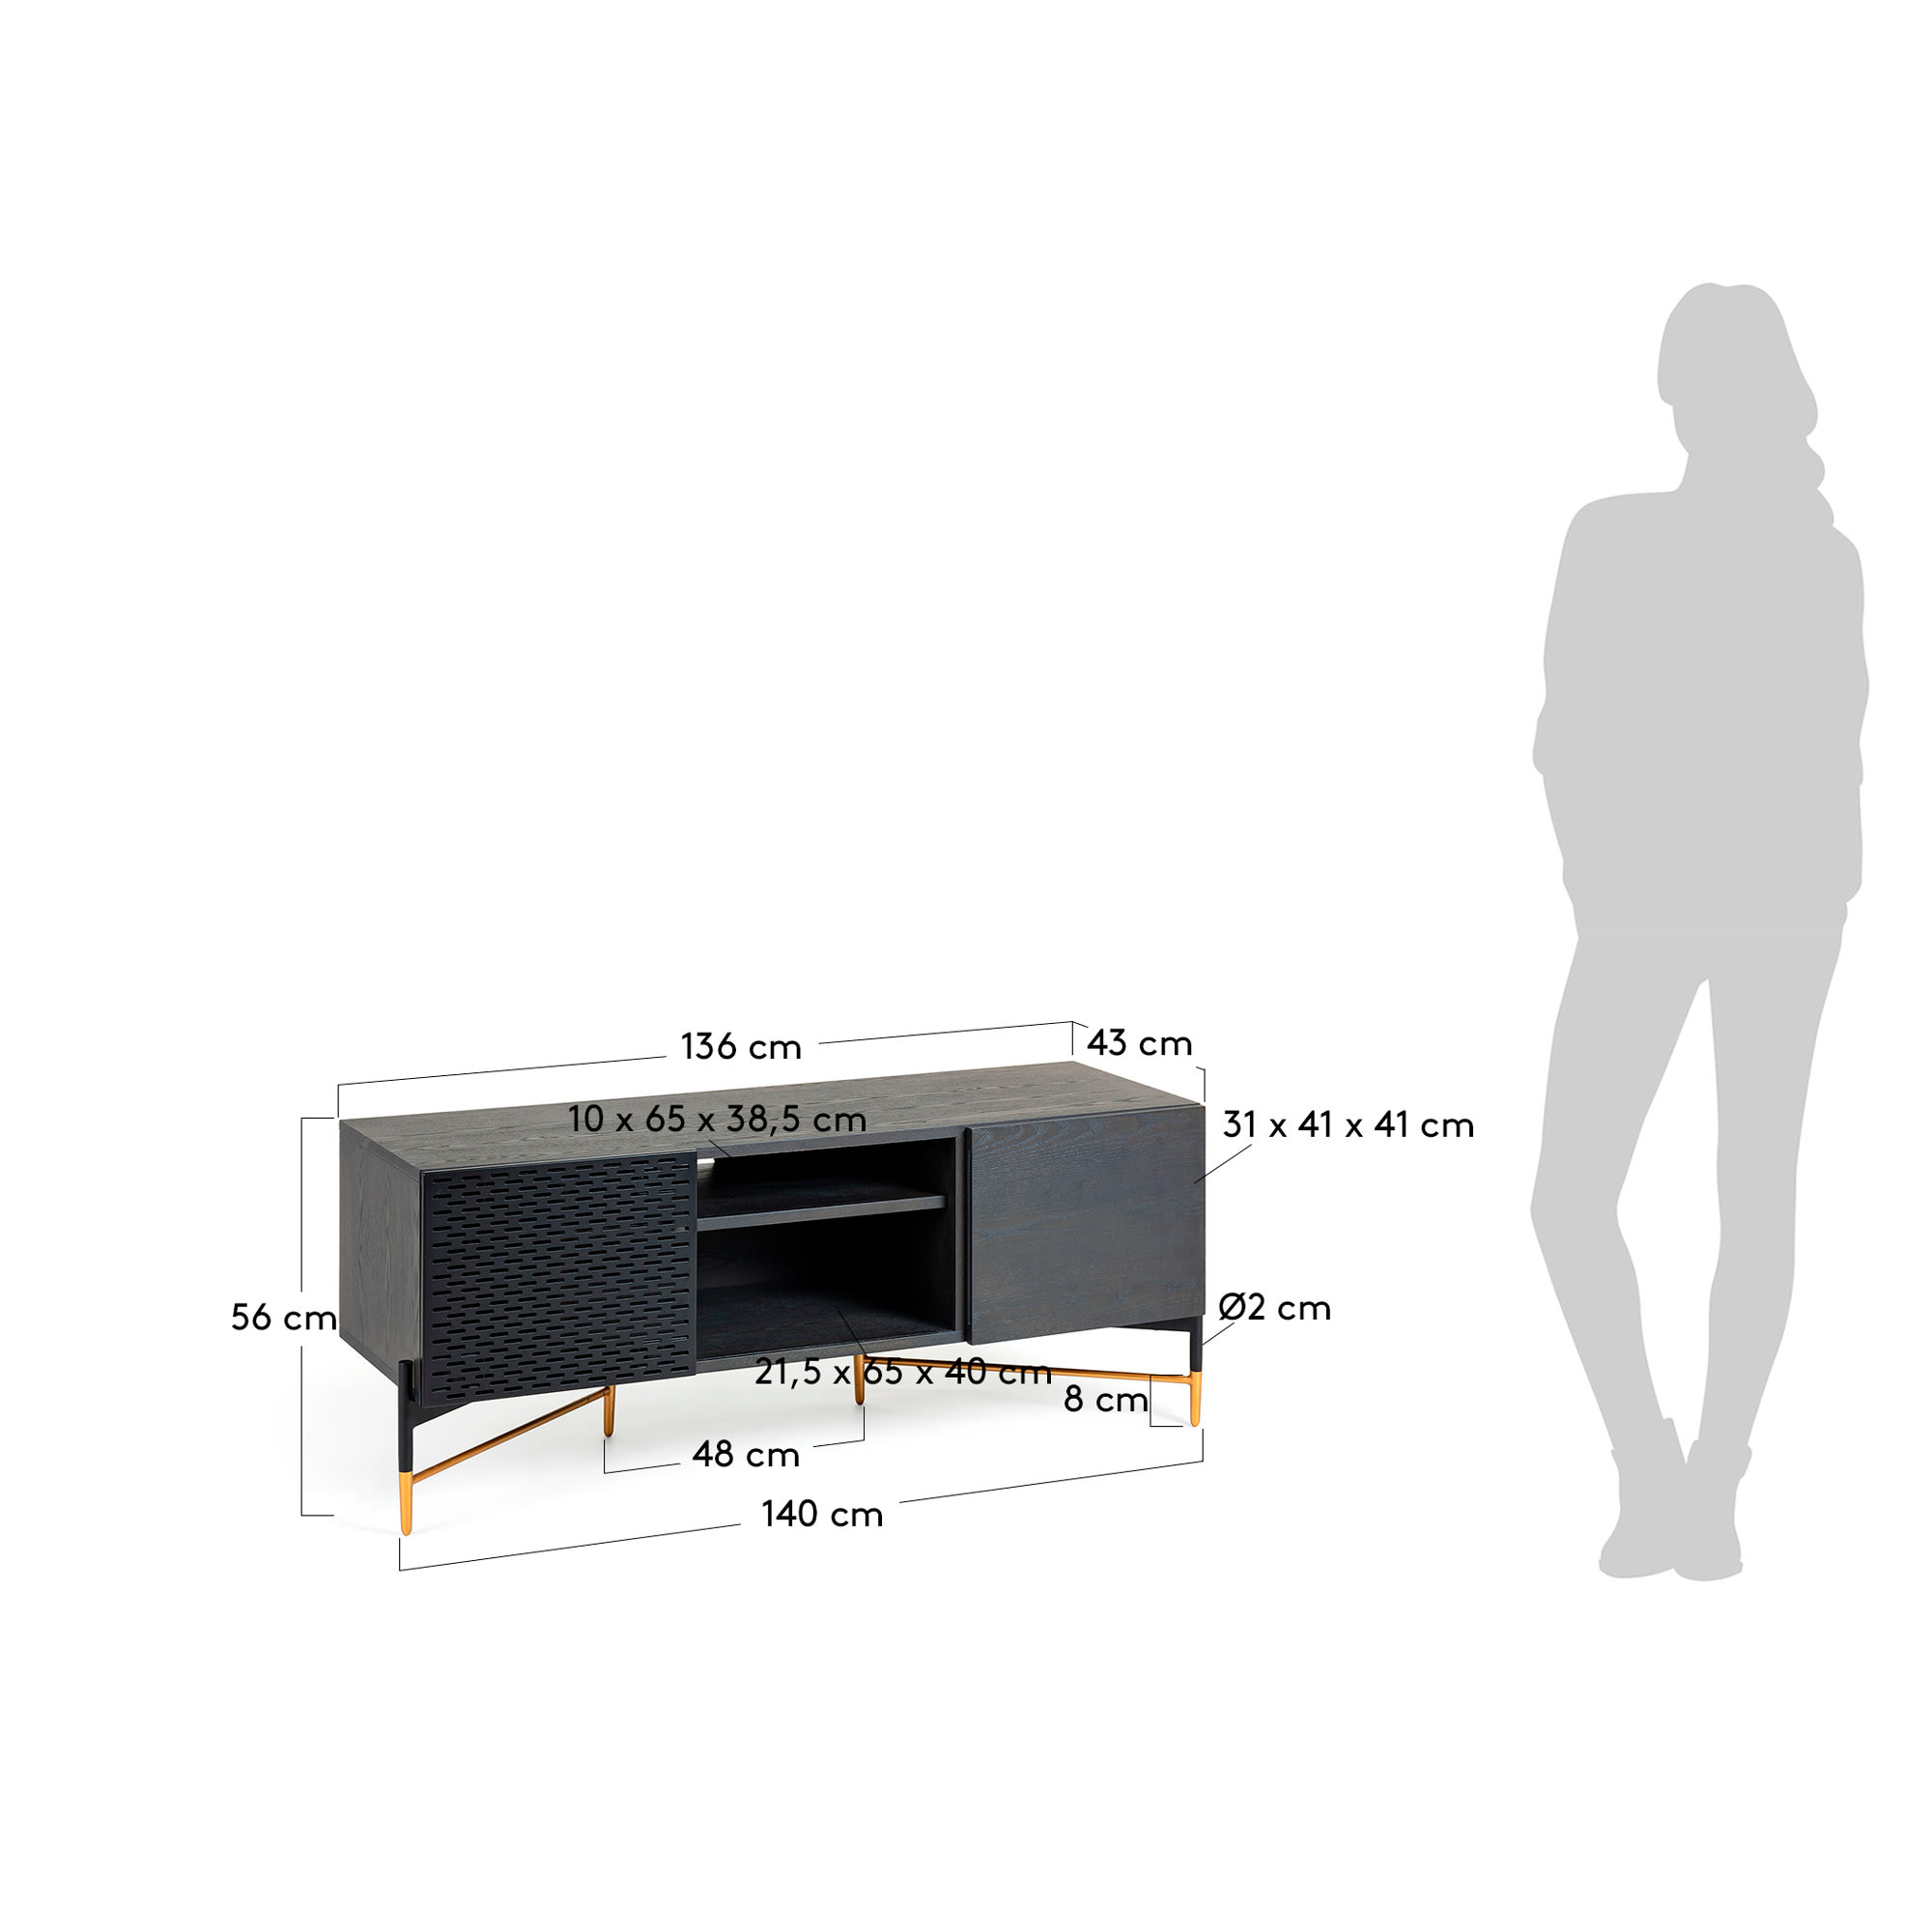 Milian ash wood veneer 2 door TV stand with steel finished in black & gold, 141 x 56 cm - sizes